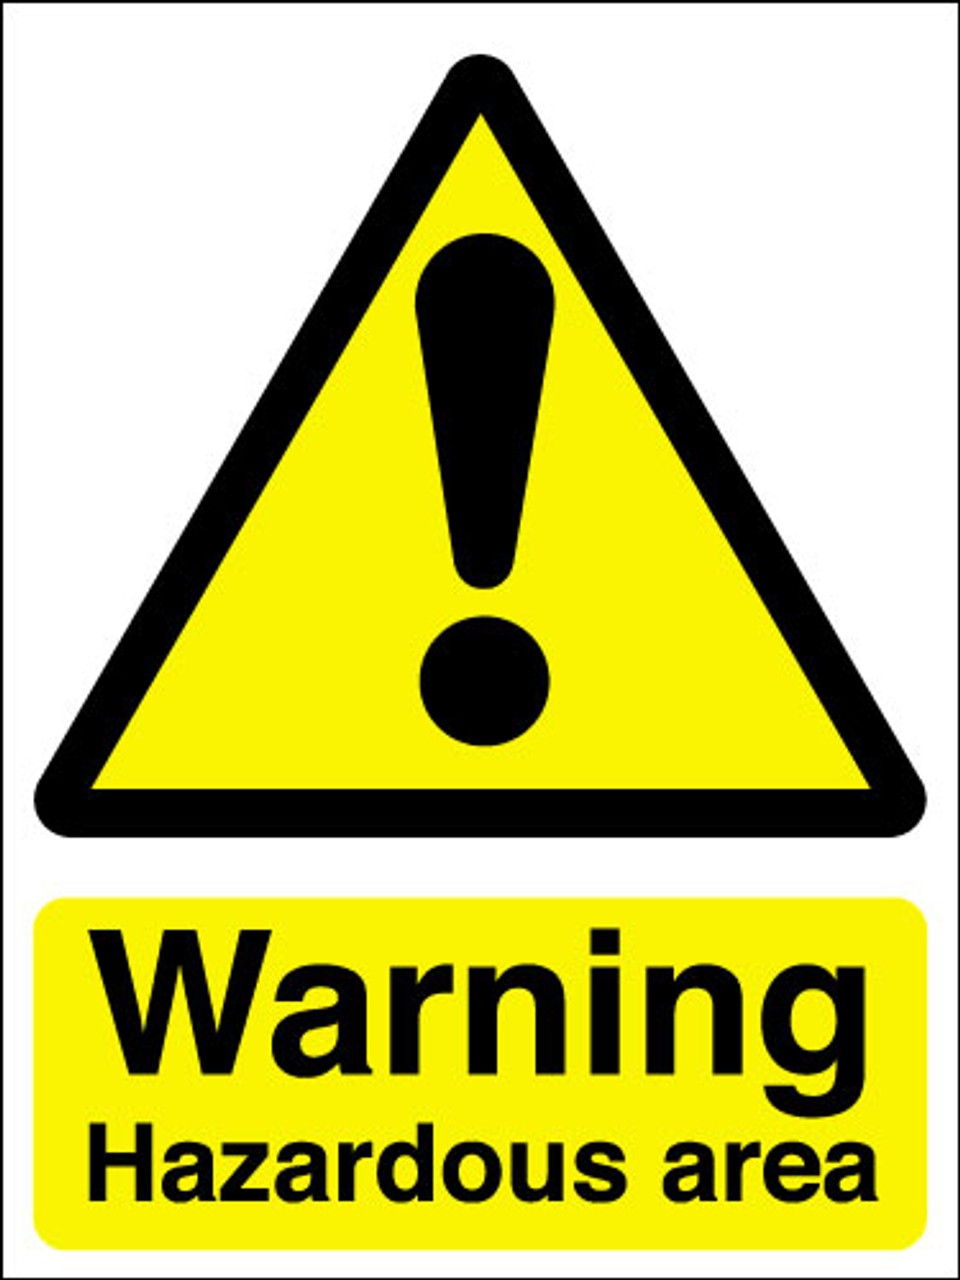 Warning hazardous area sign - Signs 2 Safety